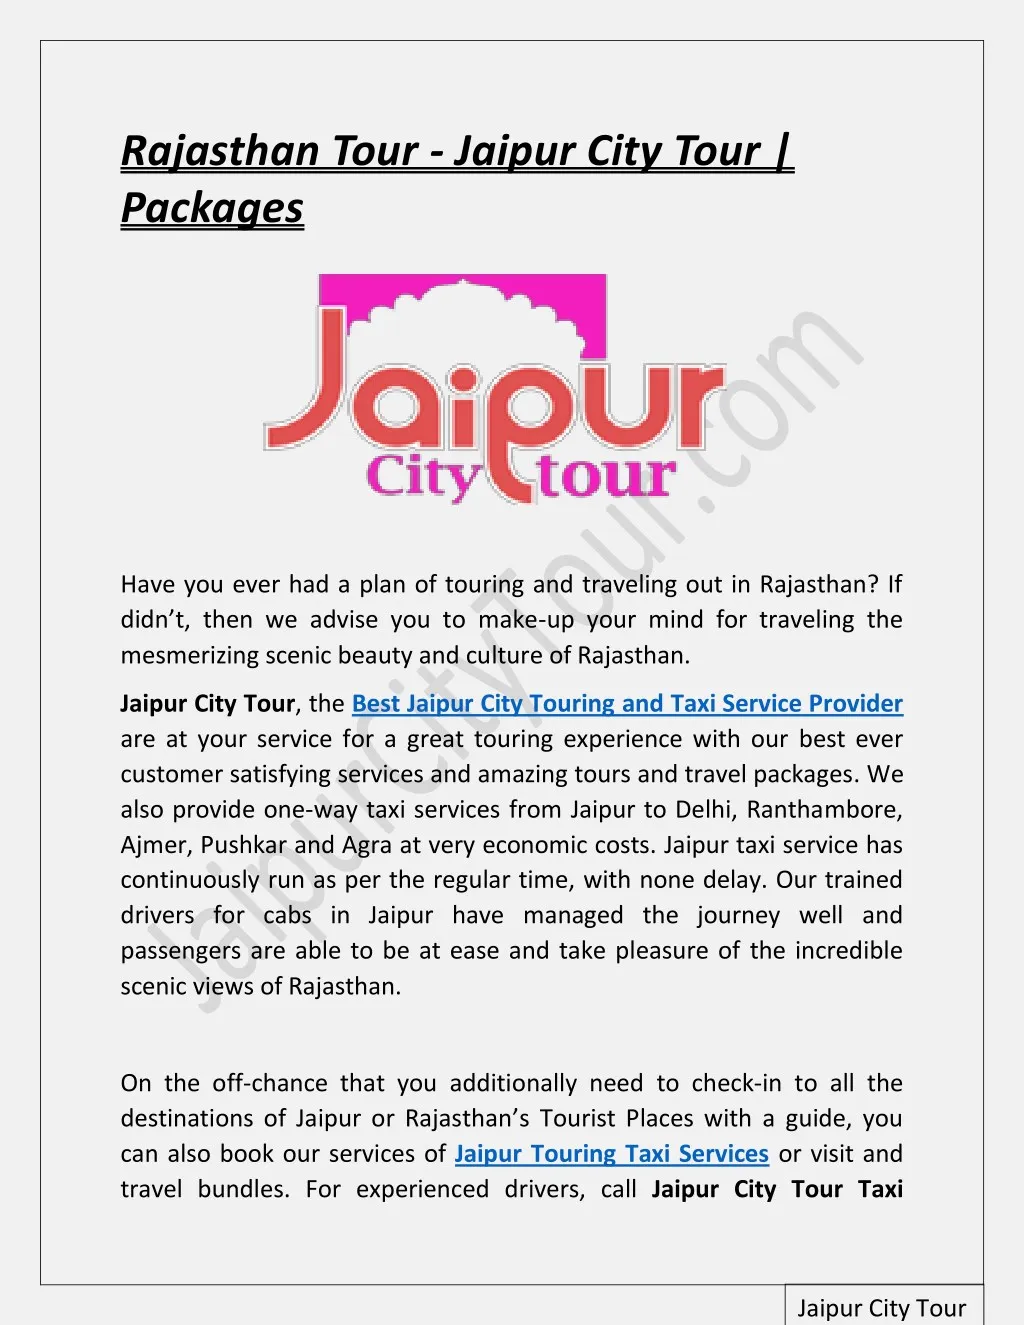 rajasthan tour jaipur city tour packages